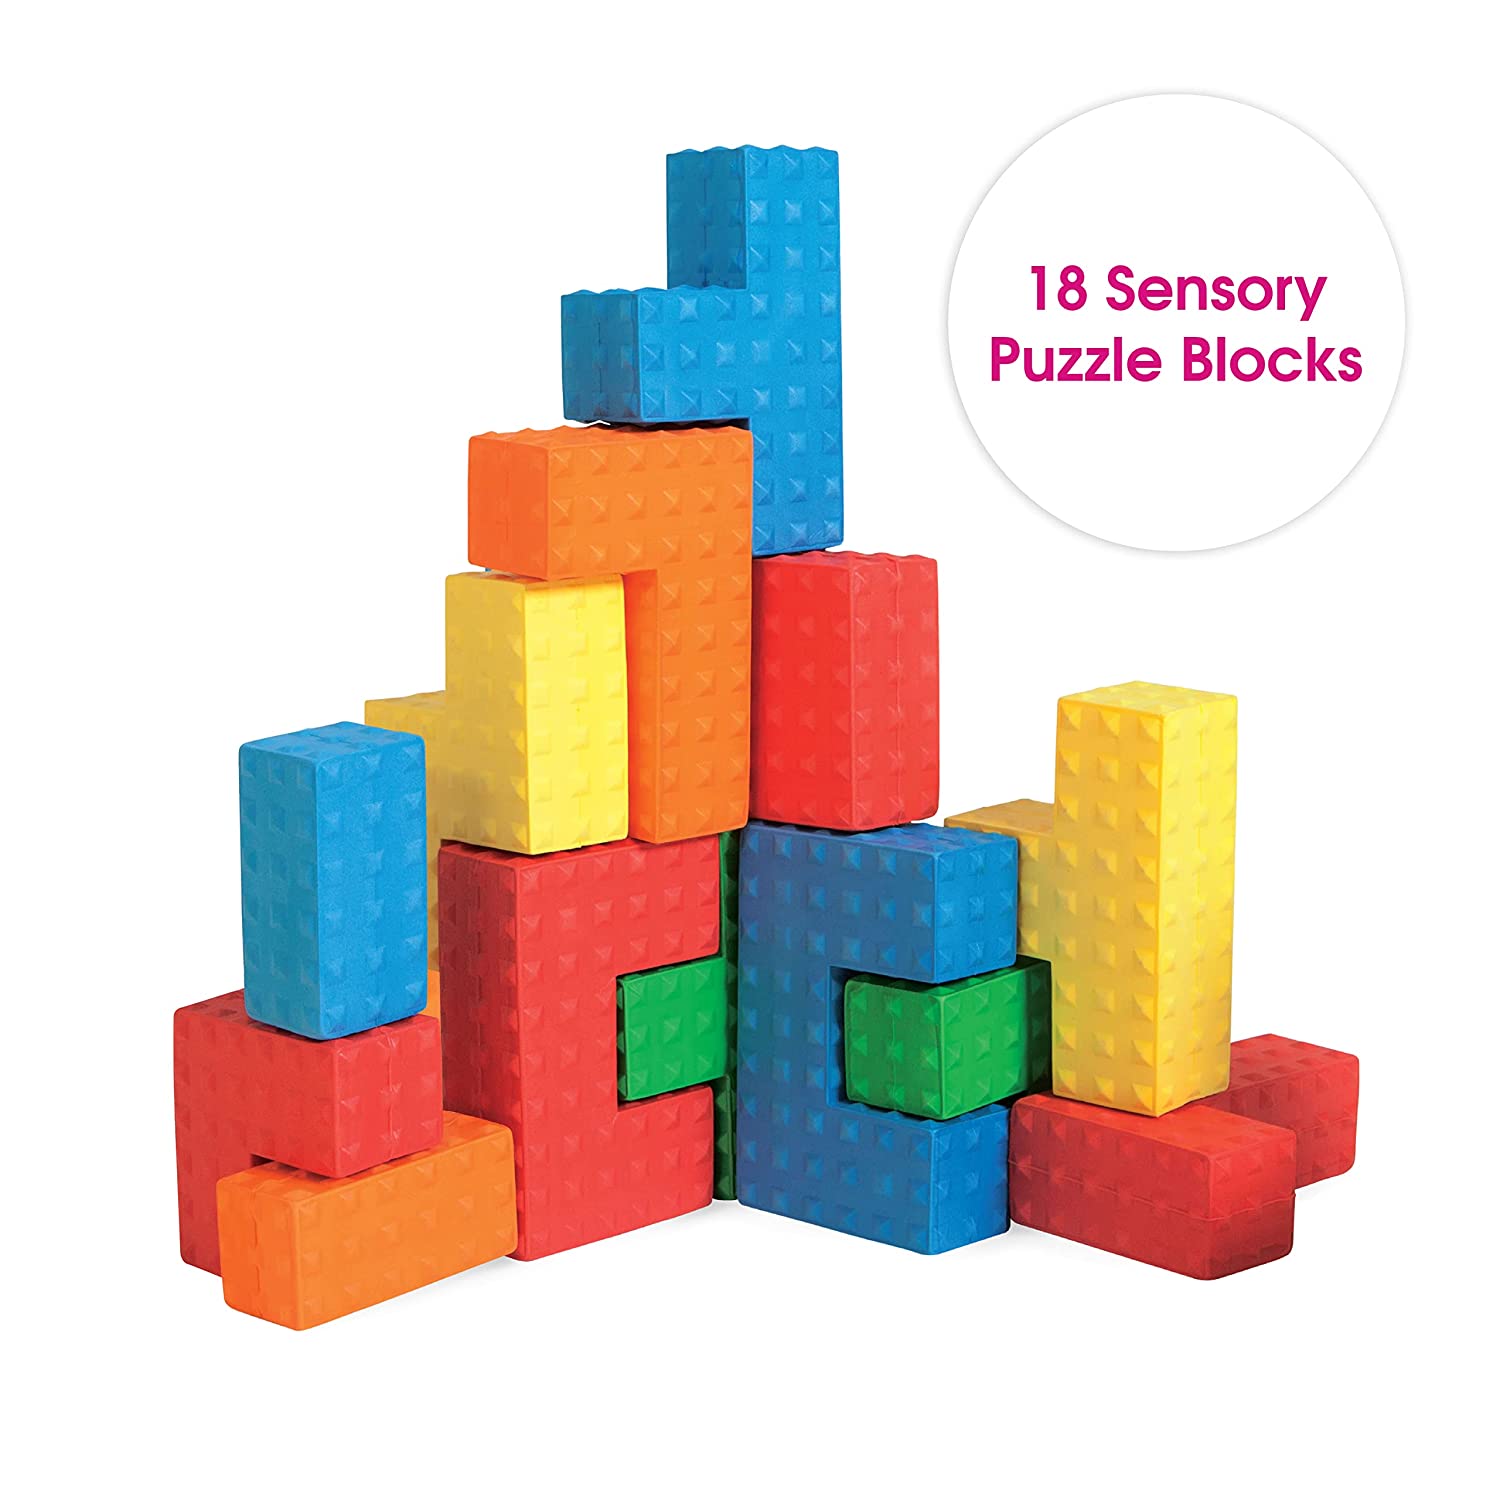 Edushape Sensory Puzzle Blocks, 18 PC Set - Colorful Textured Interlocking Construction Block Puzzles for Sensory Development in Toddlers &amp; Kids - Soft Baby Blocks, STEM Educational Learning Toy